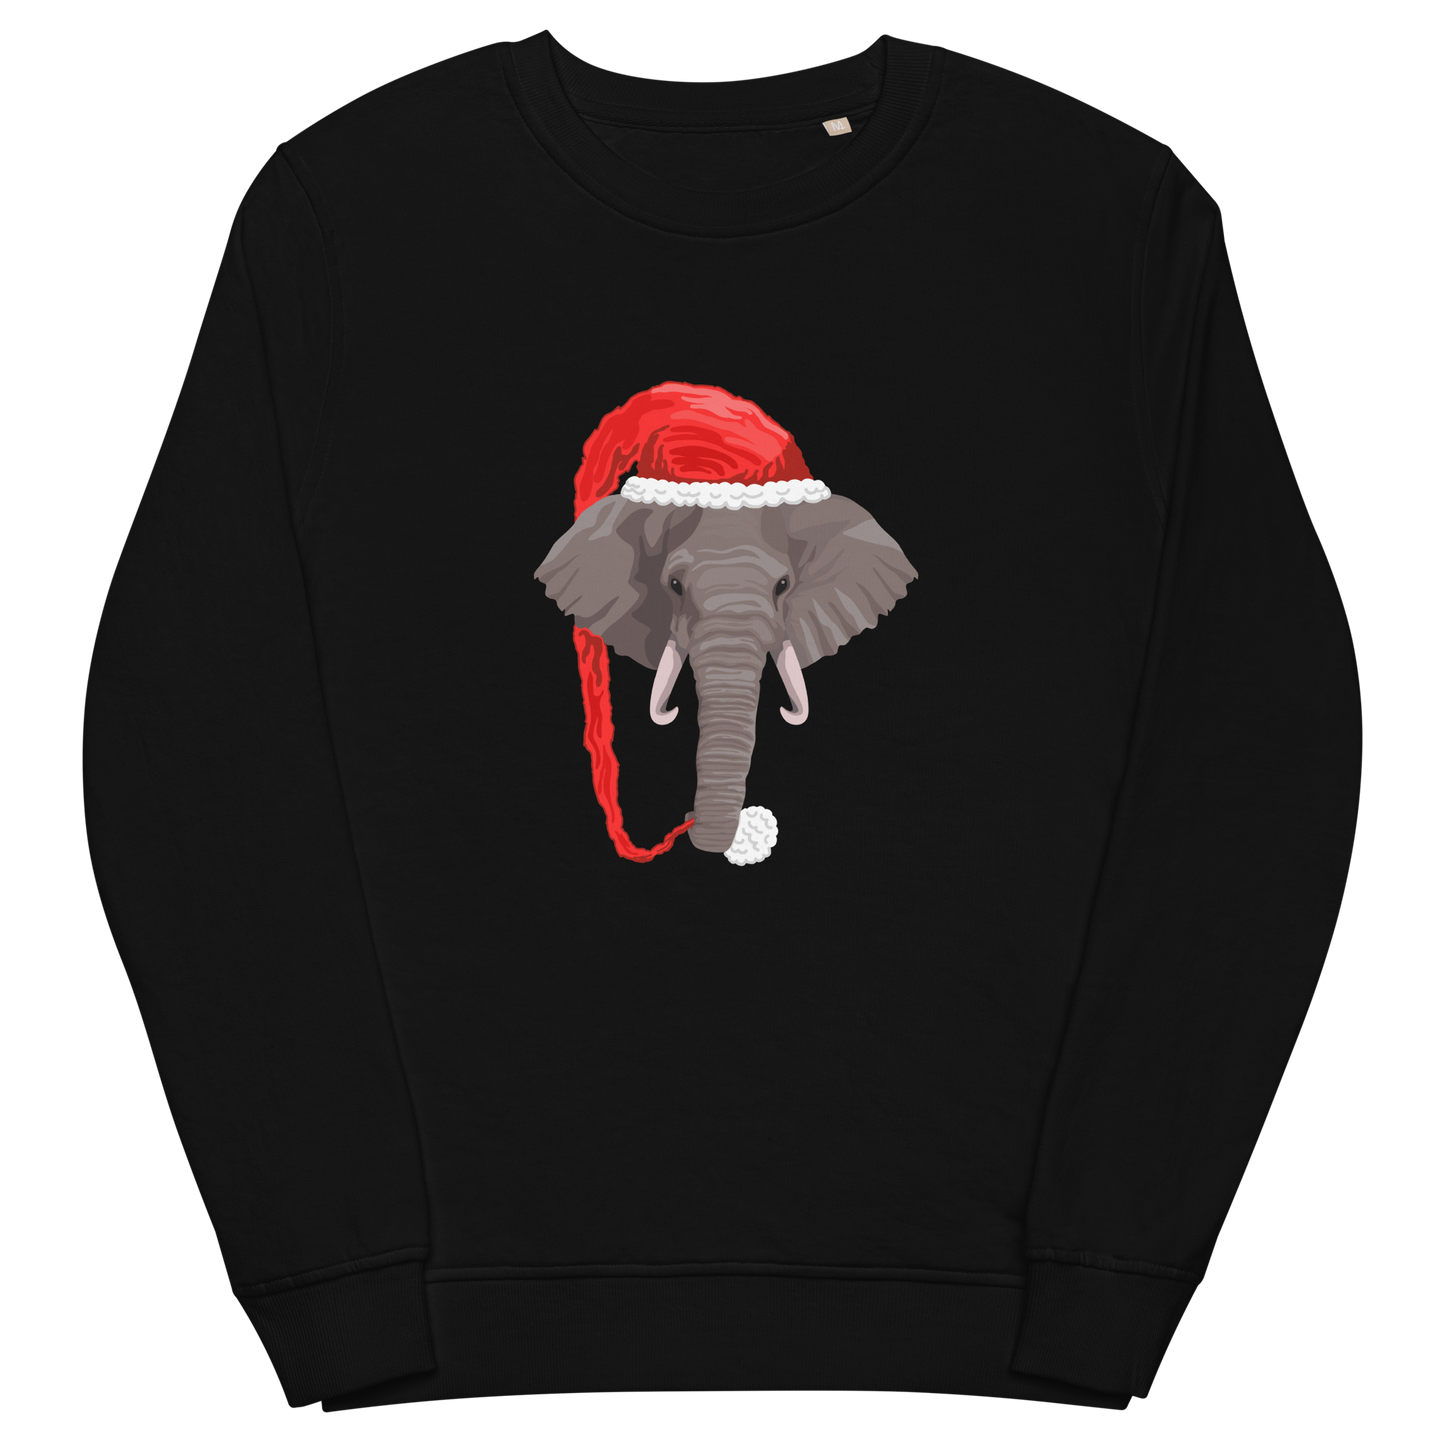 Black Organic Christmas Elephant Sweatshirt featuring a delight Elephant Wearing an Elf Hat graphic on the chest - Funny Christmas Graphic Elephant Sweatshirts - Boozy Fox